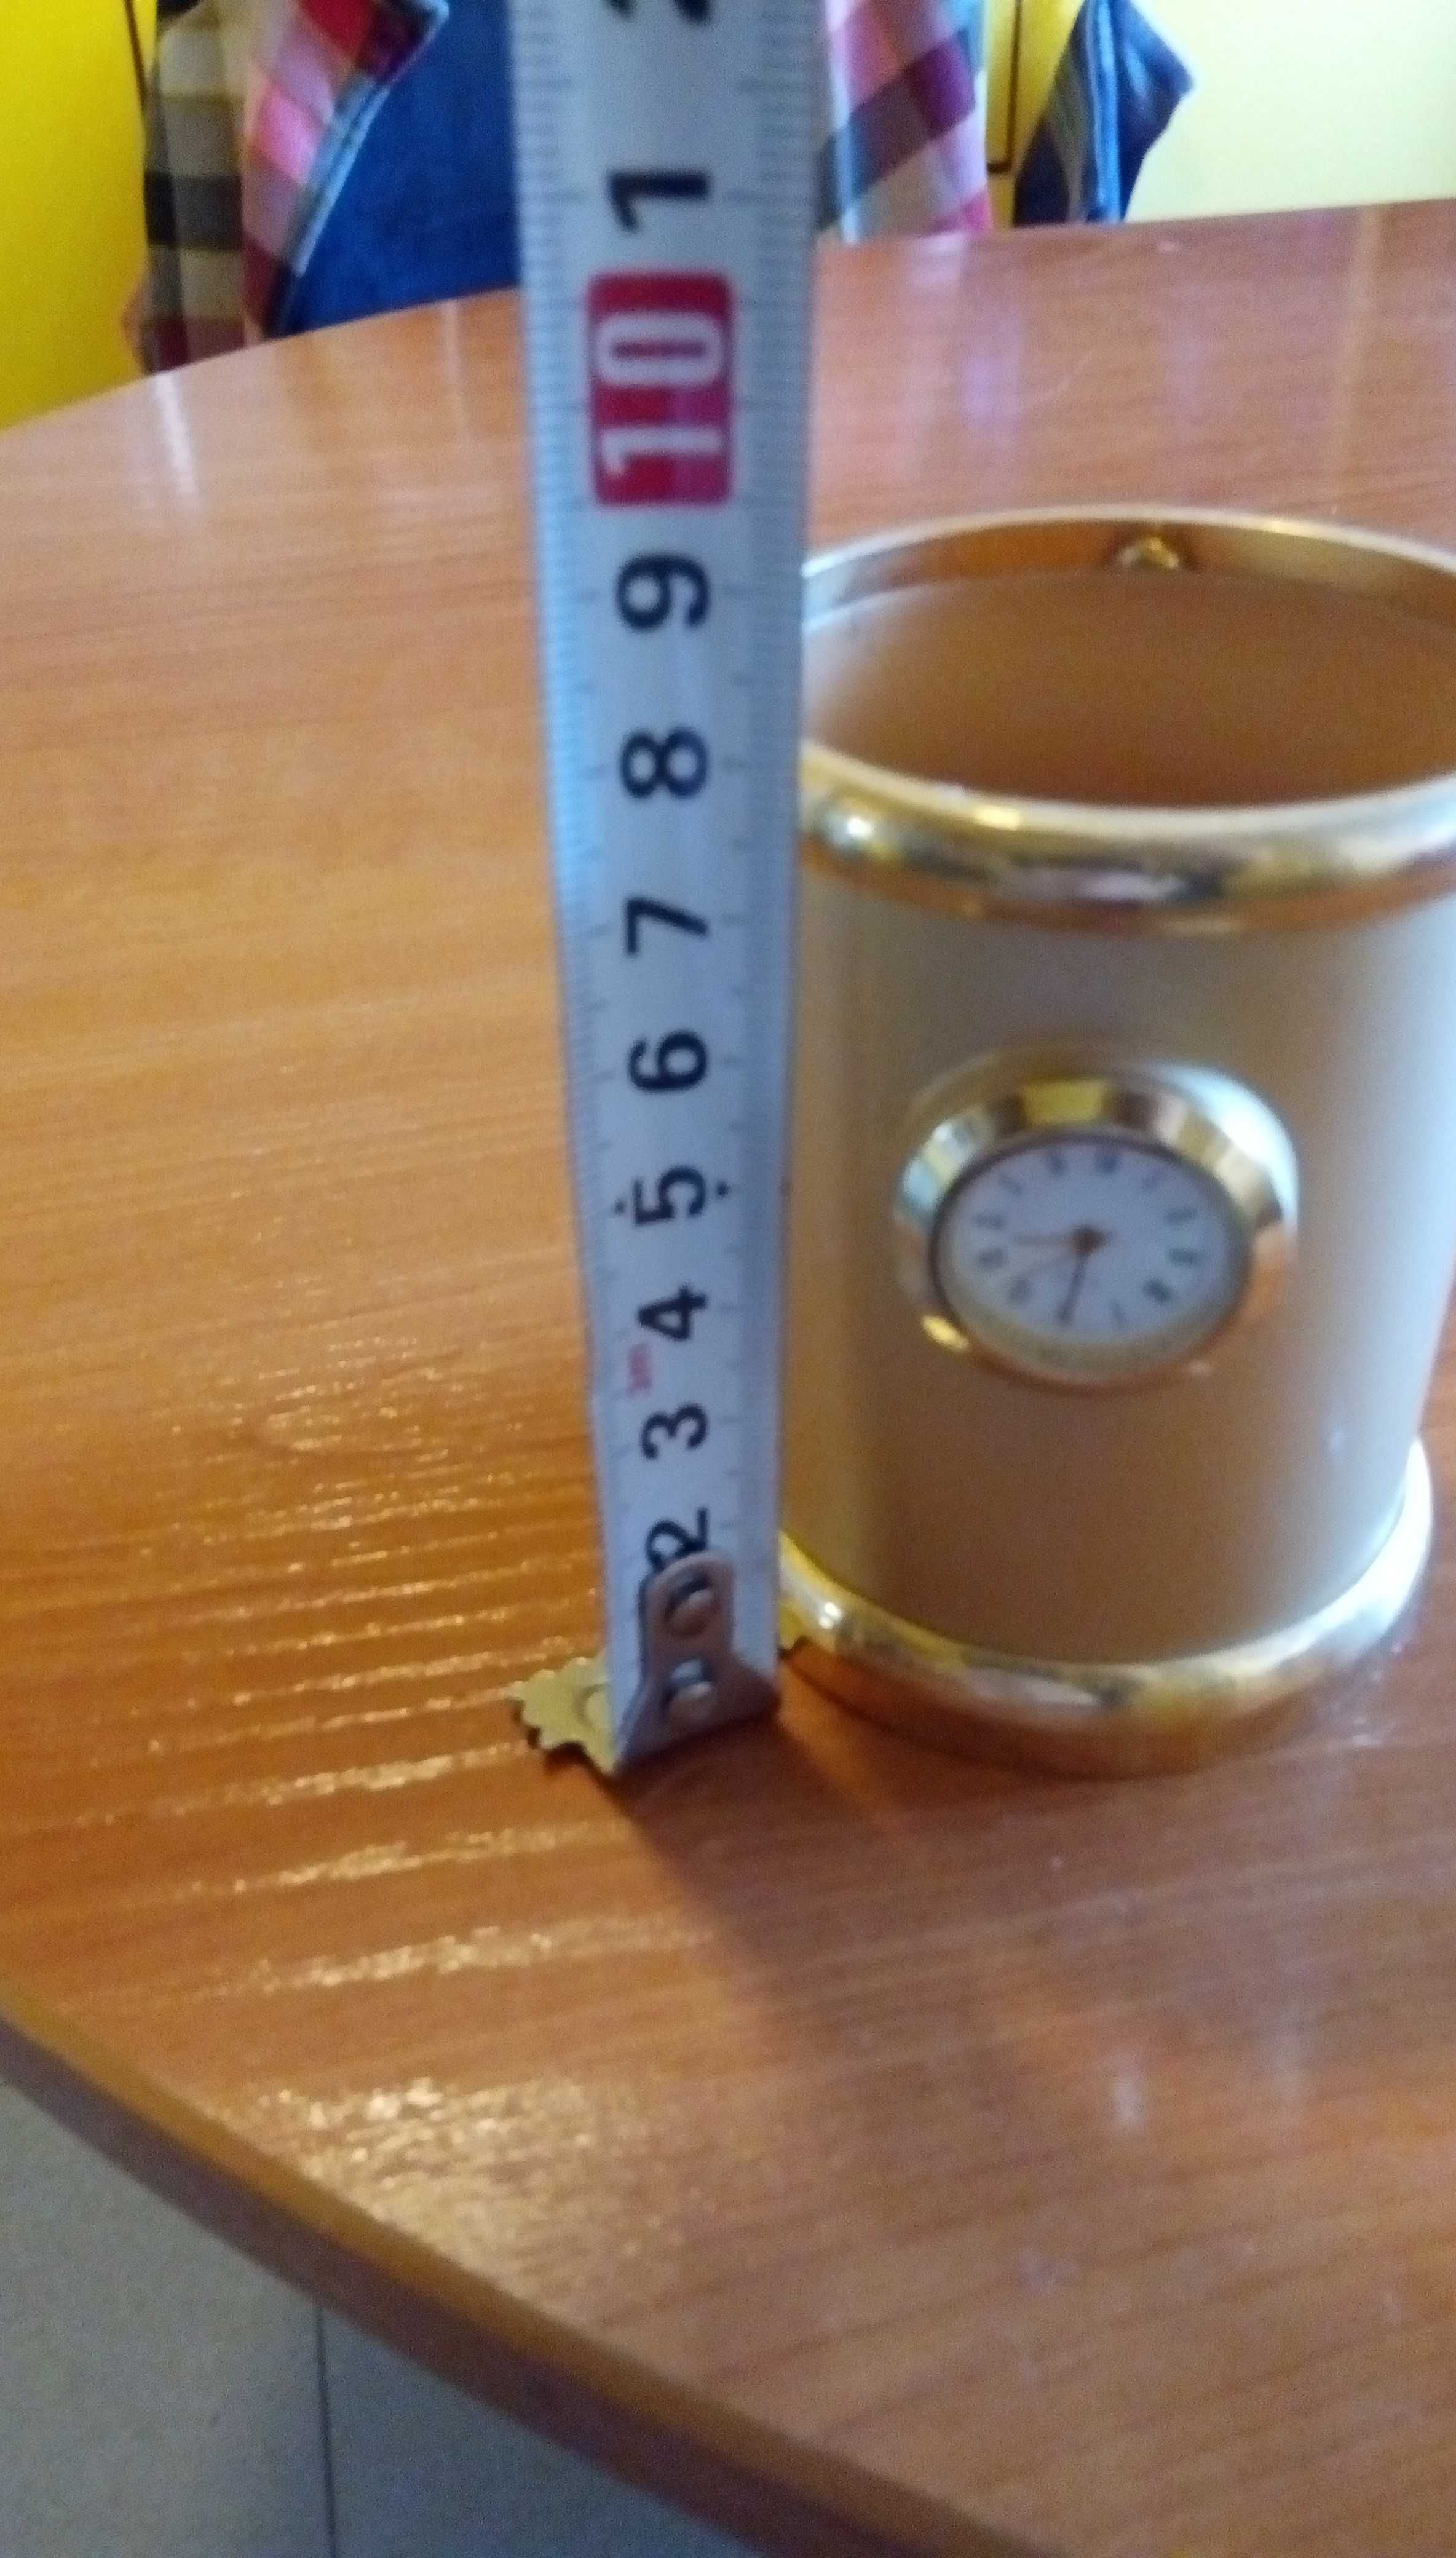 Метален златист моливник с часовник